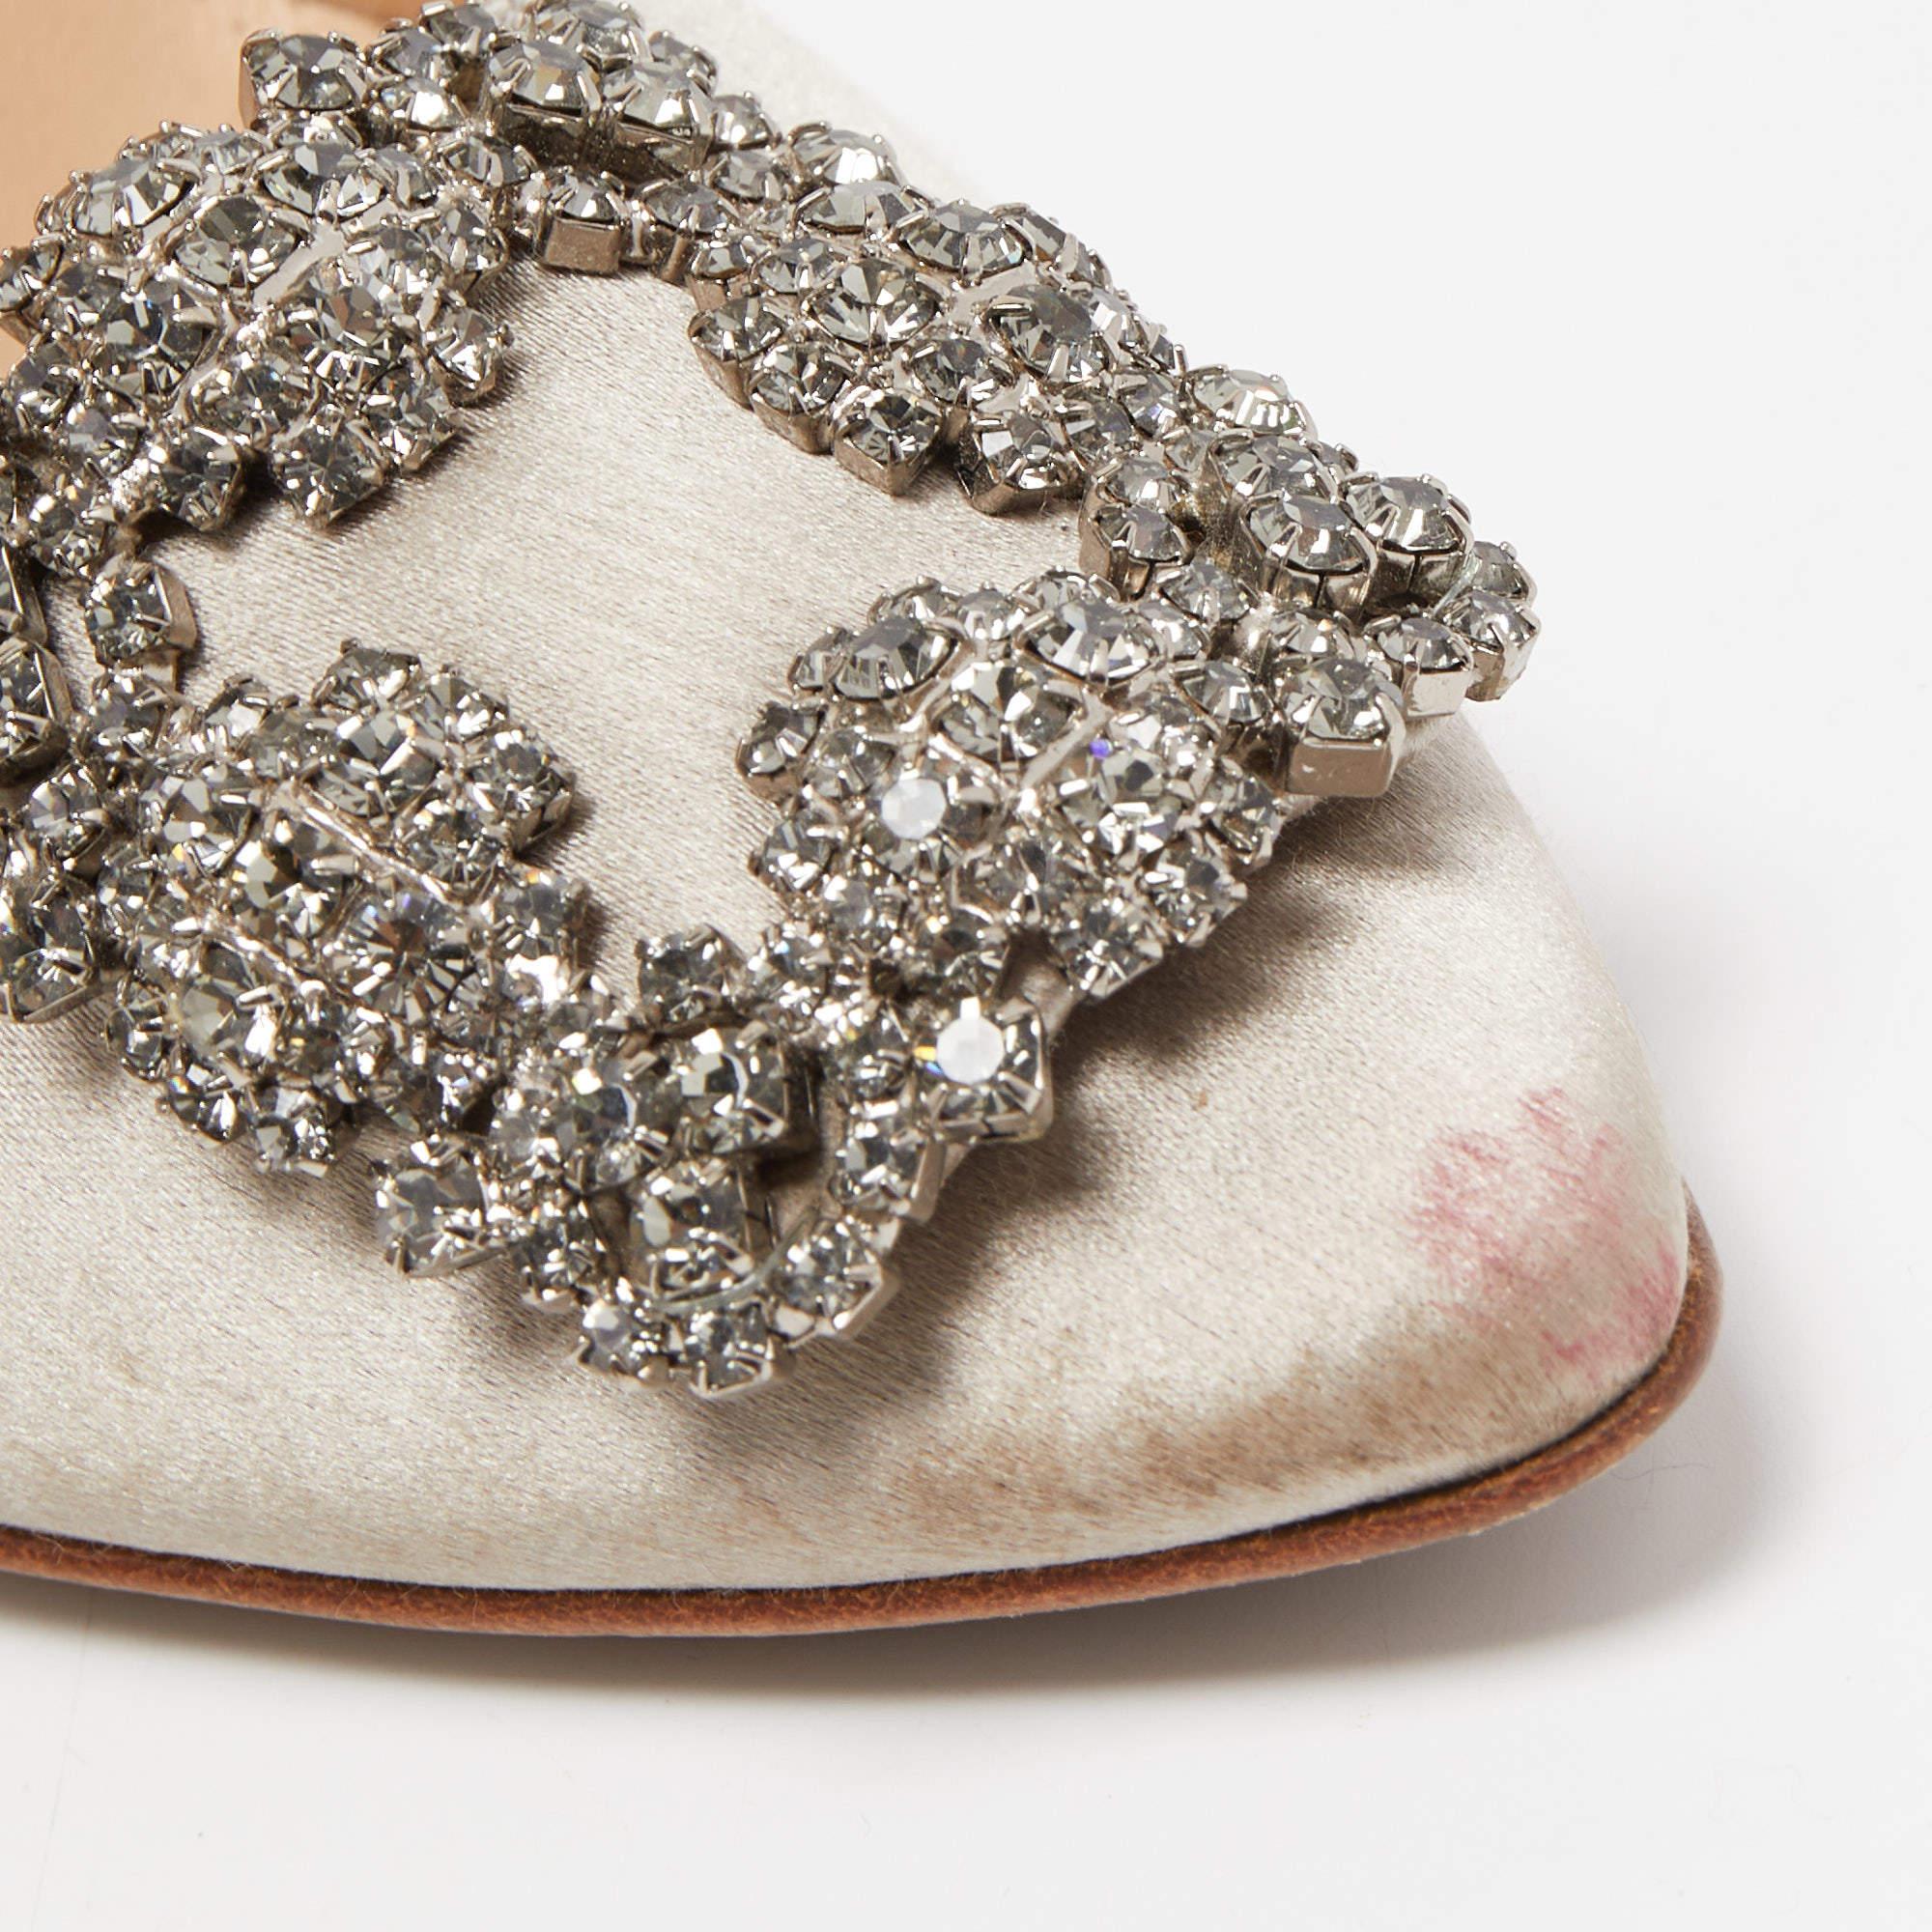 Manolo Blahnik Grey Satin Hangisi Crystal Embellished Pointed Toe Pumps Size 36 1